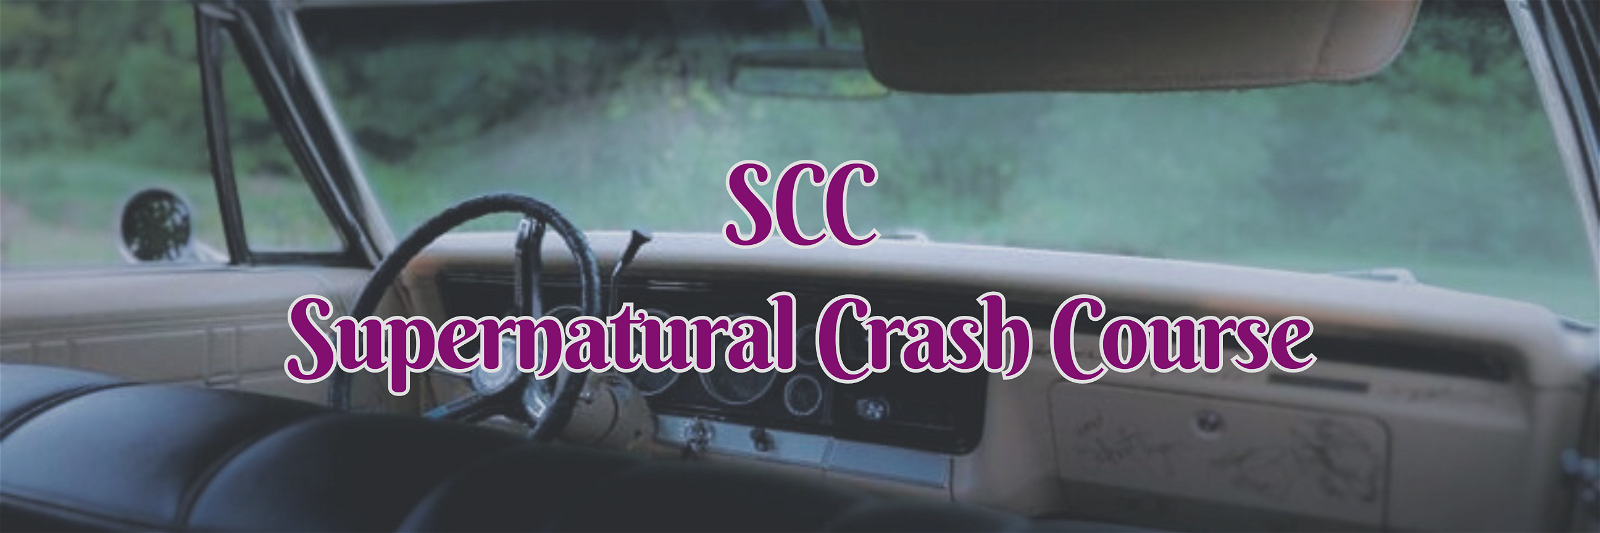 Supernatural Crash Course #4 - God